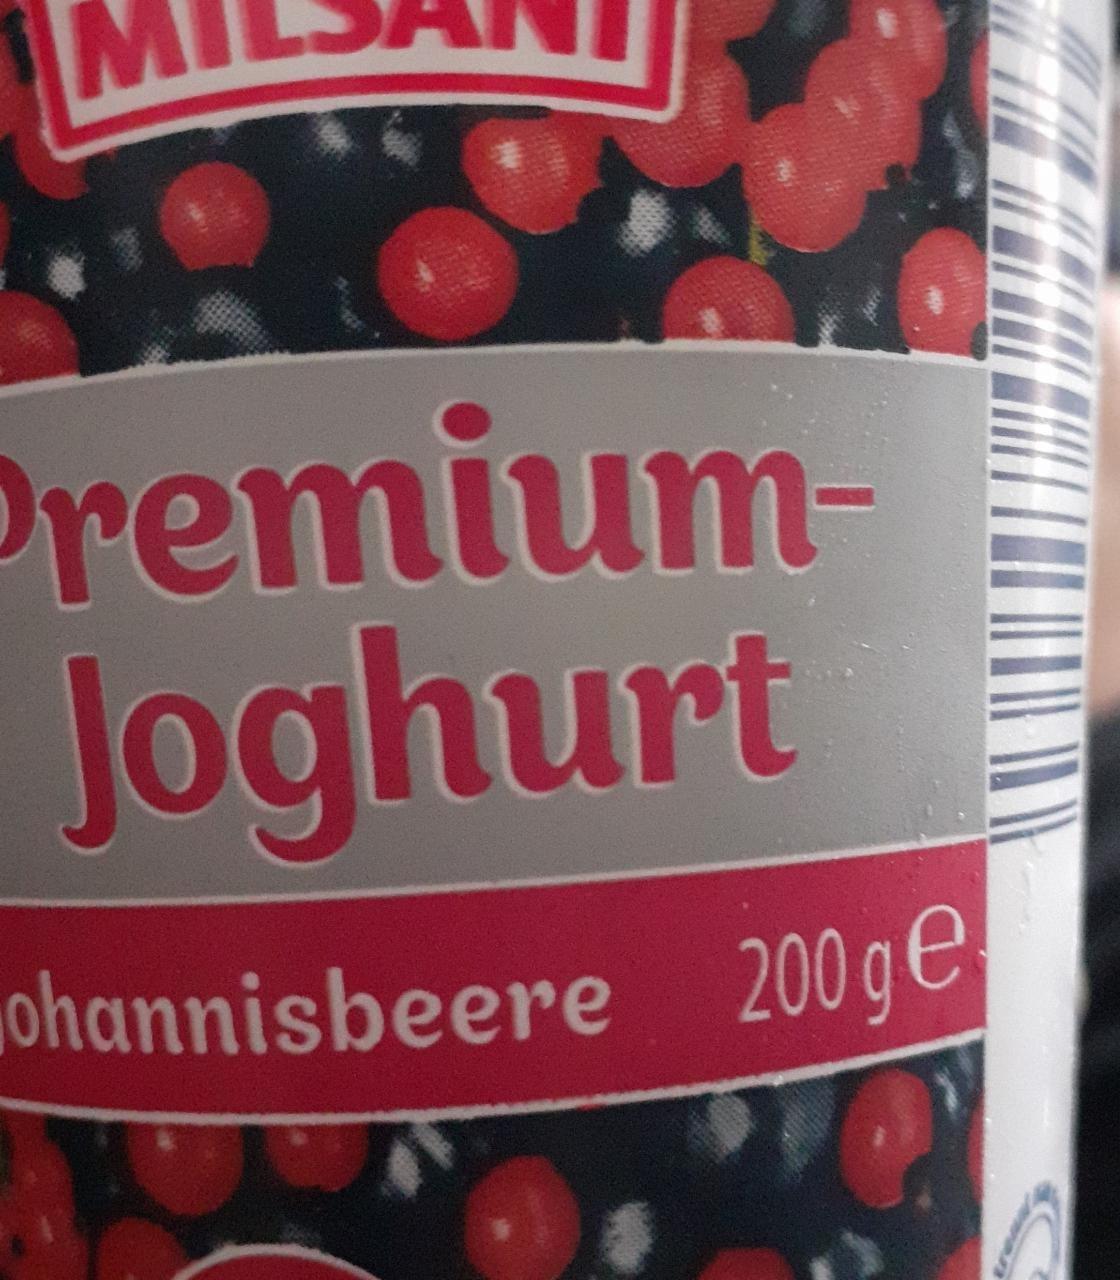 Fotografie - Premium Joghurt Johannisbeere Milsani